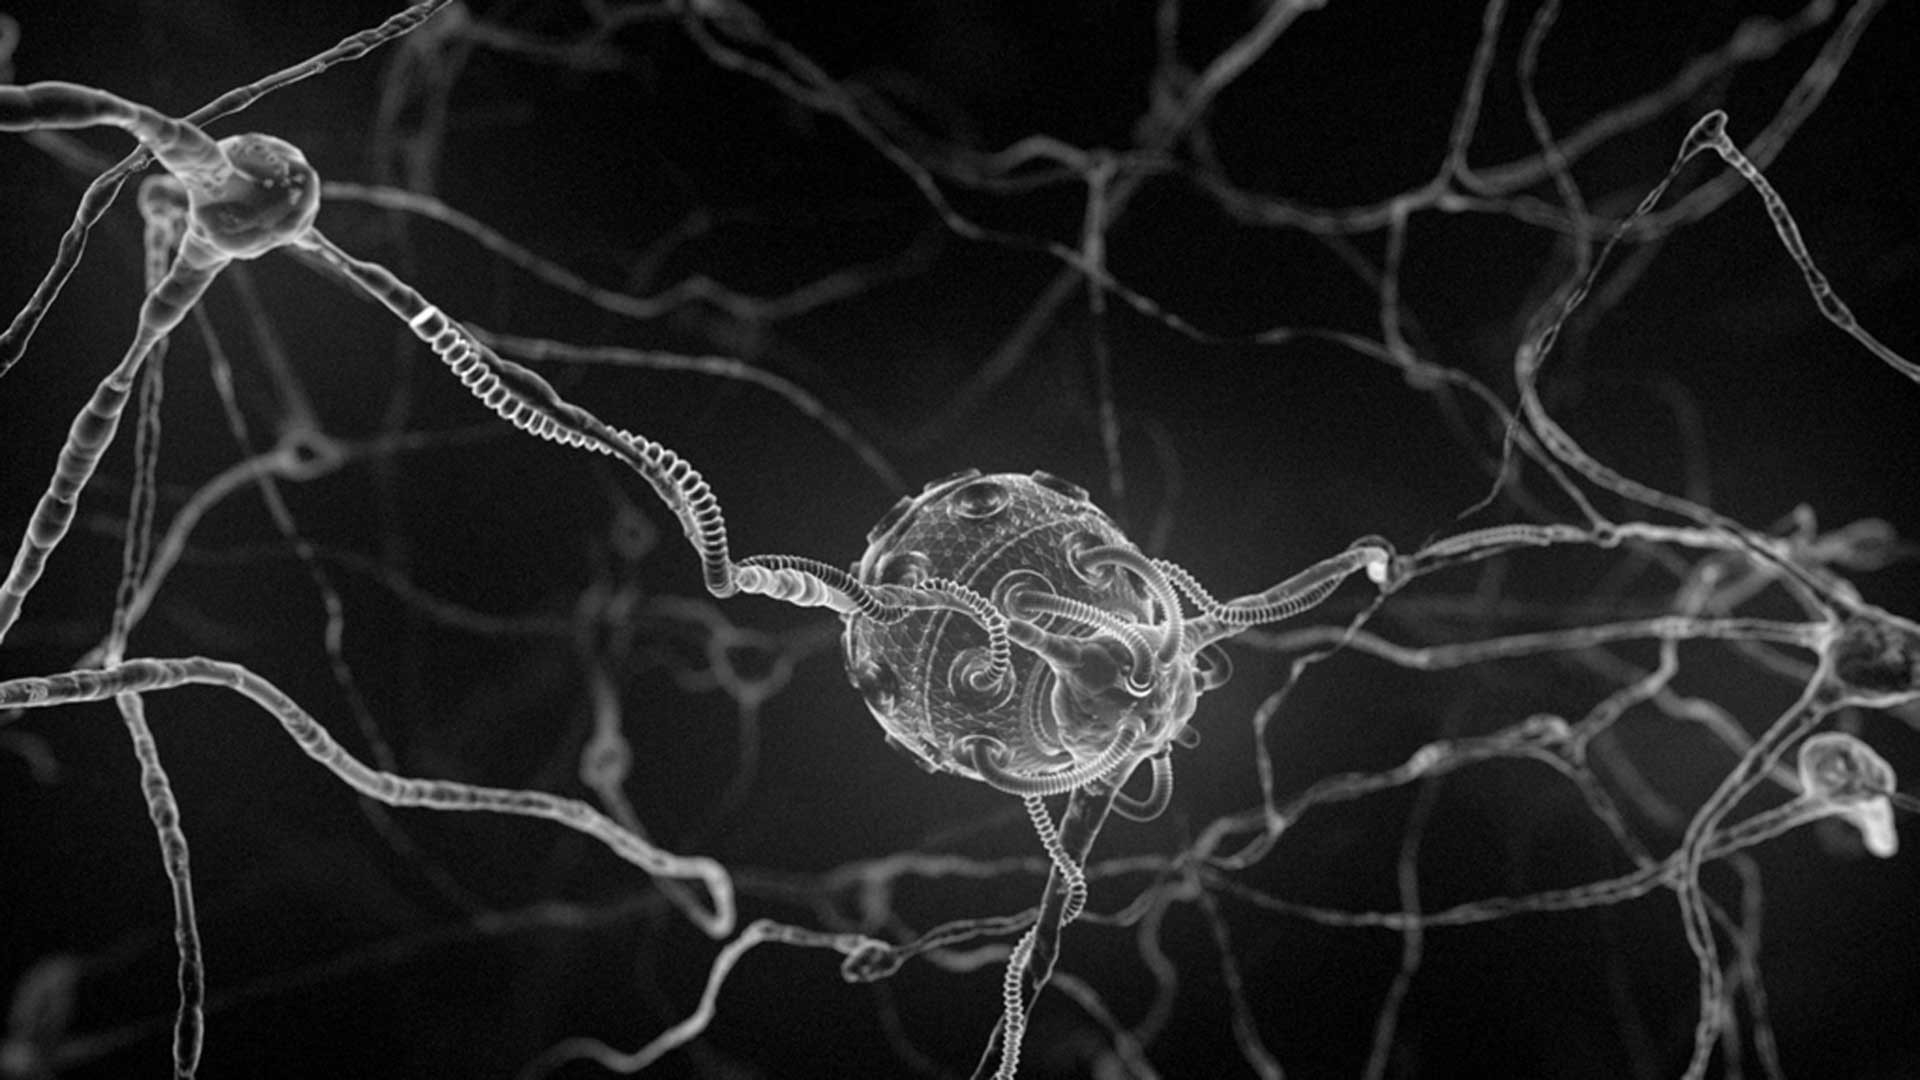 digital art microscopic nerves cg anatomy human wallpaper background